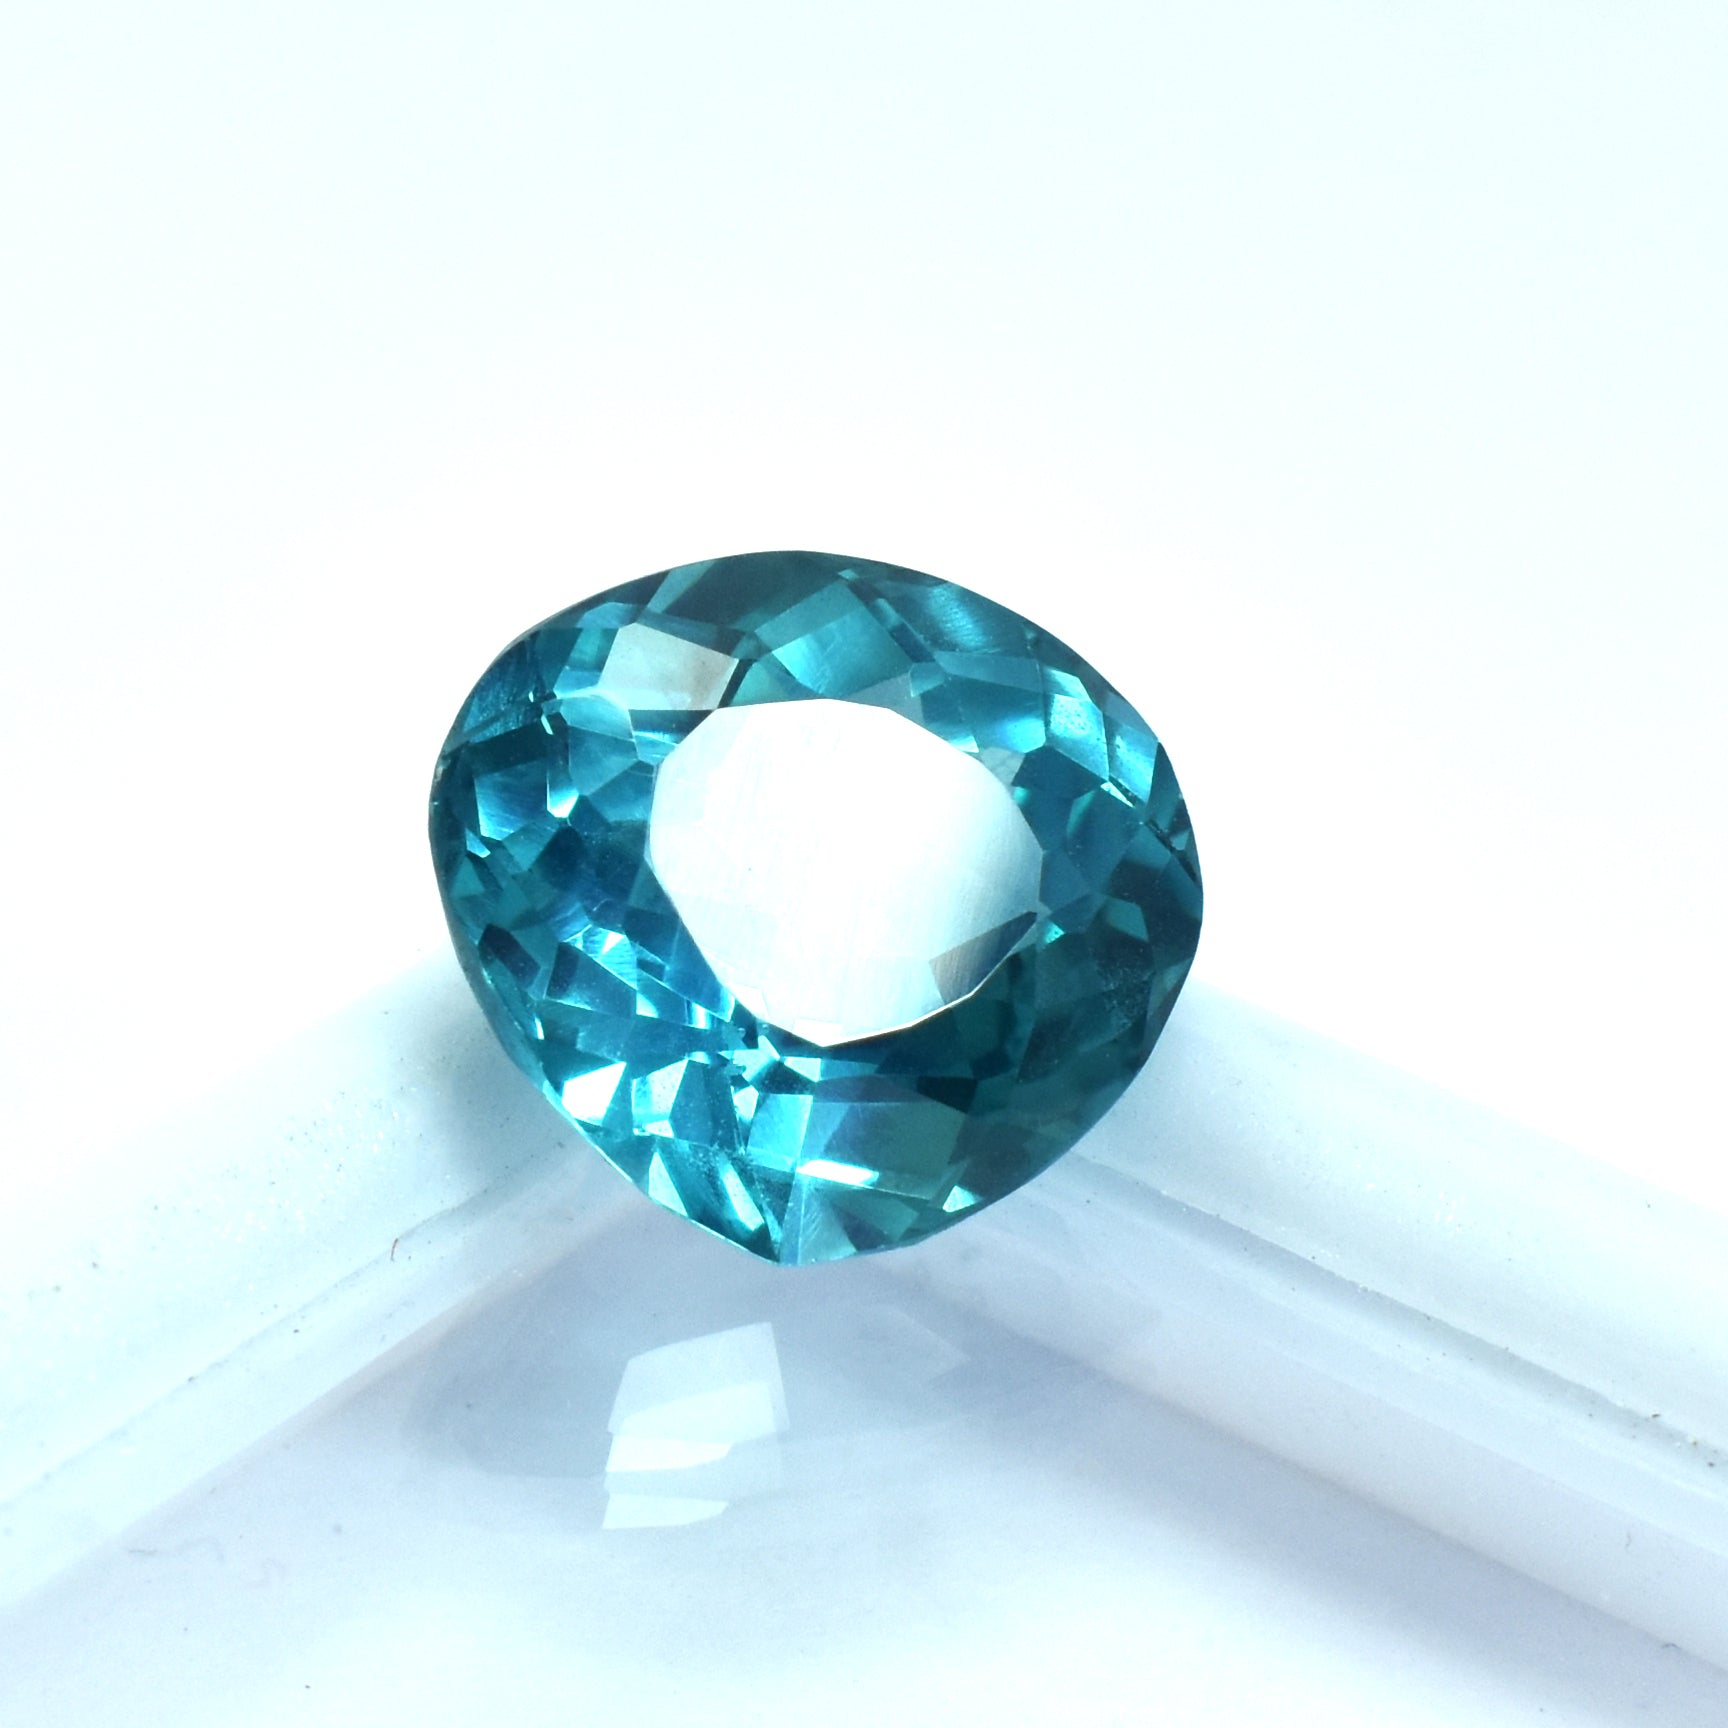 Sri Lanka Sapphire Natural 6.05 Carat Pear Shape Bluish Green Montana Sapphire Natural Certified Gemstone